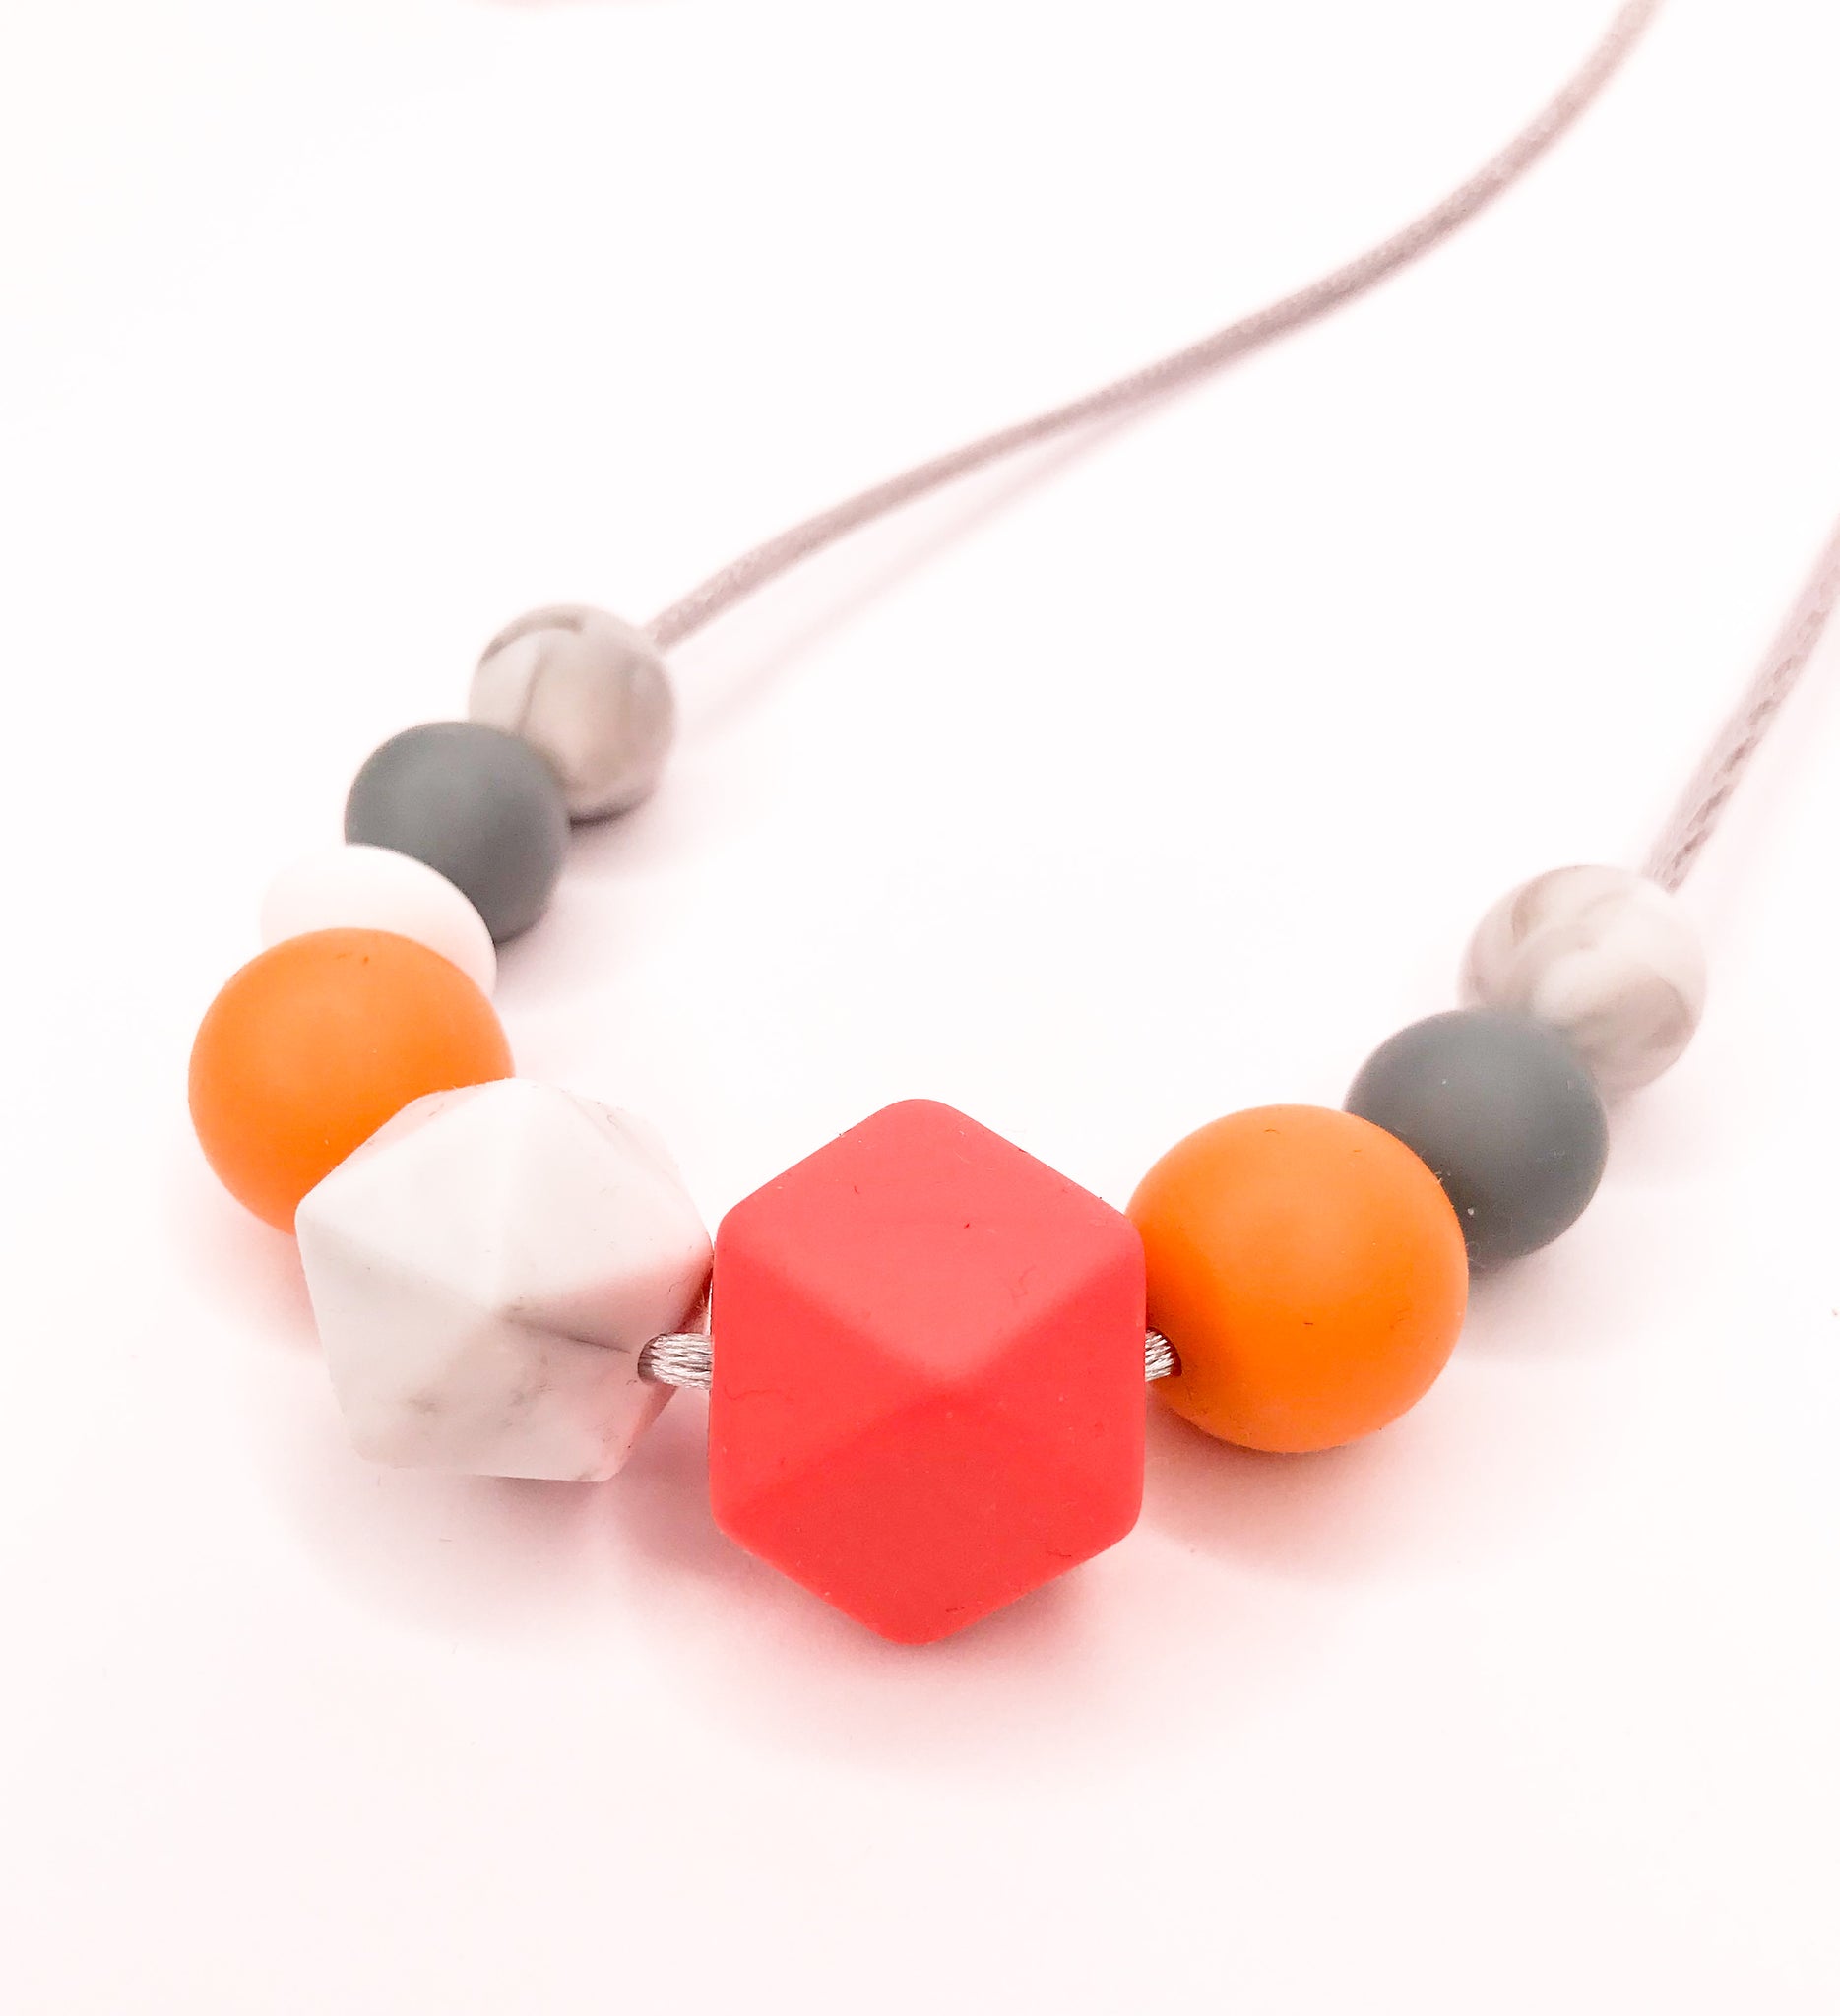 Silicone teething necklace for mum breastfeeding necklace nursing jewellery  | eBay